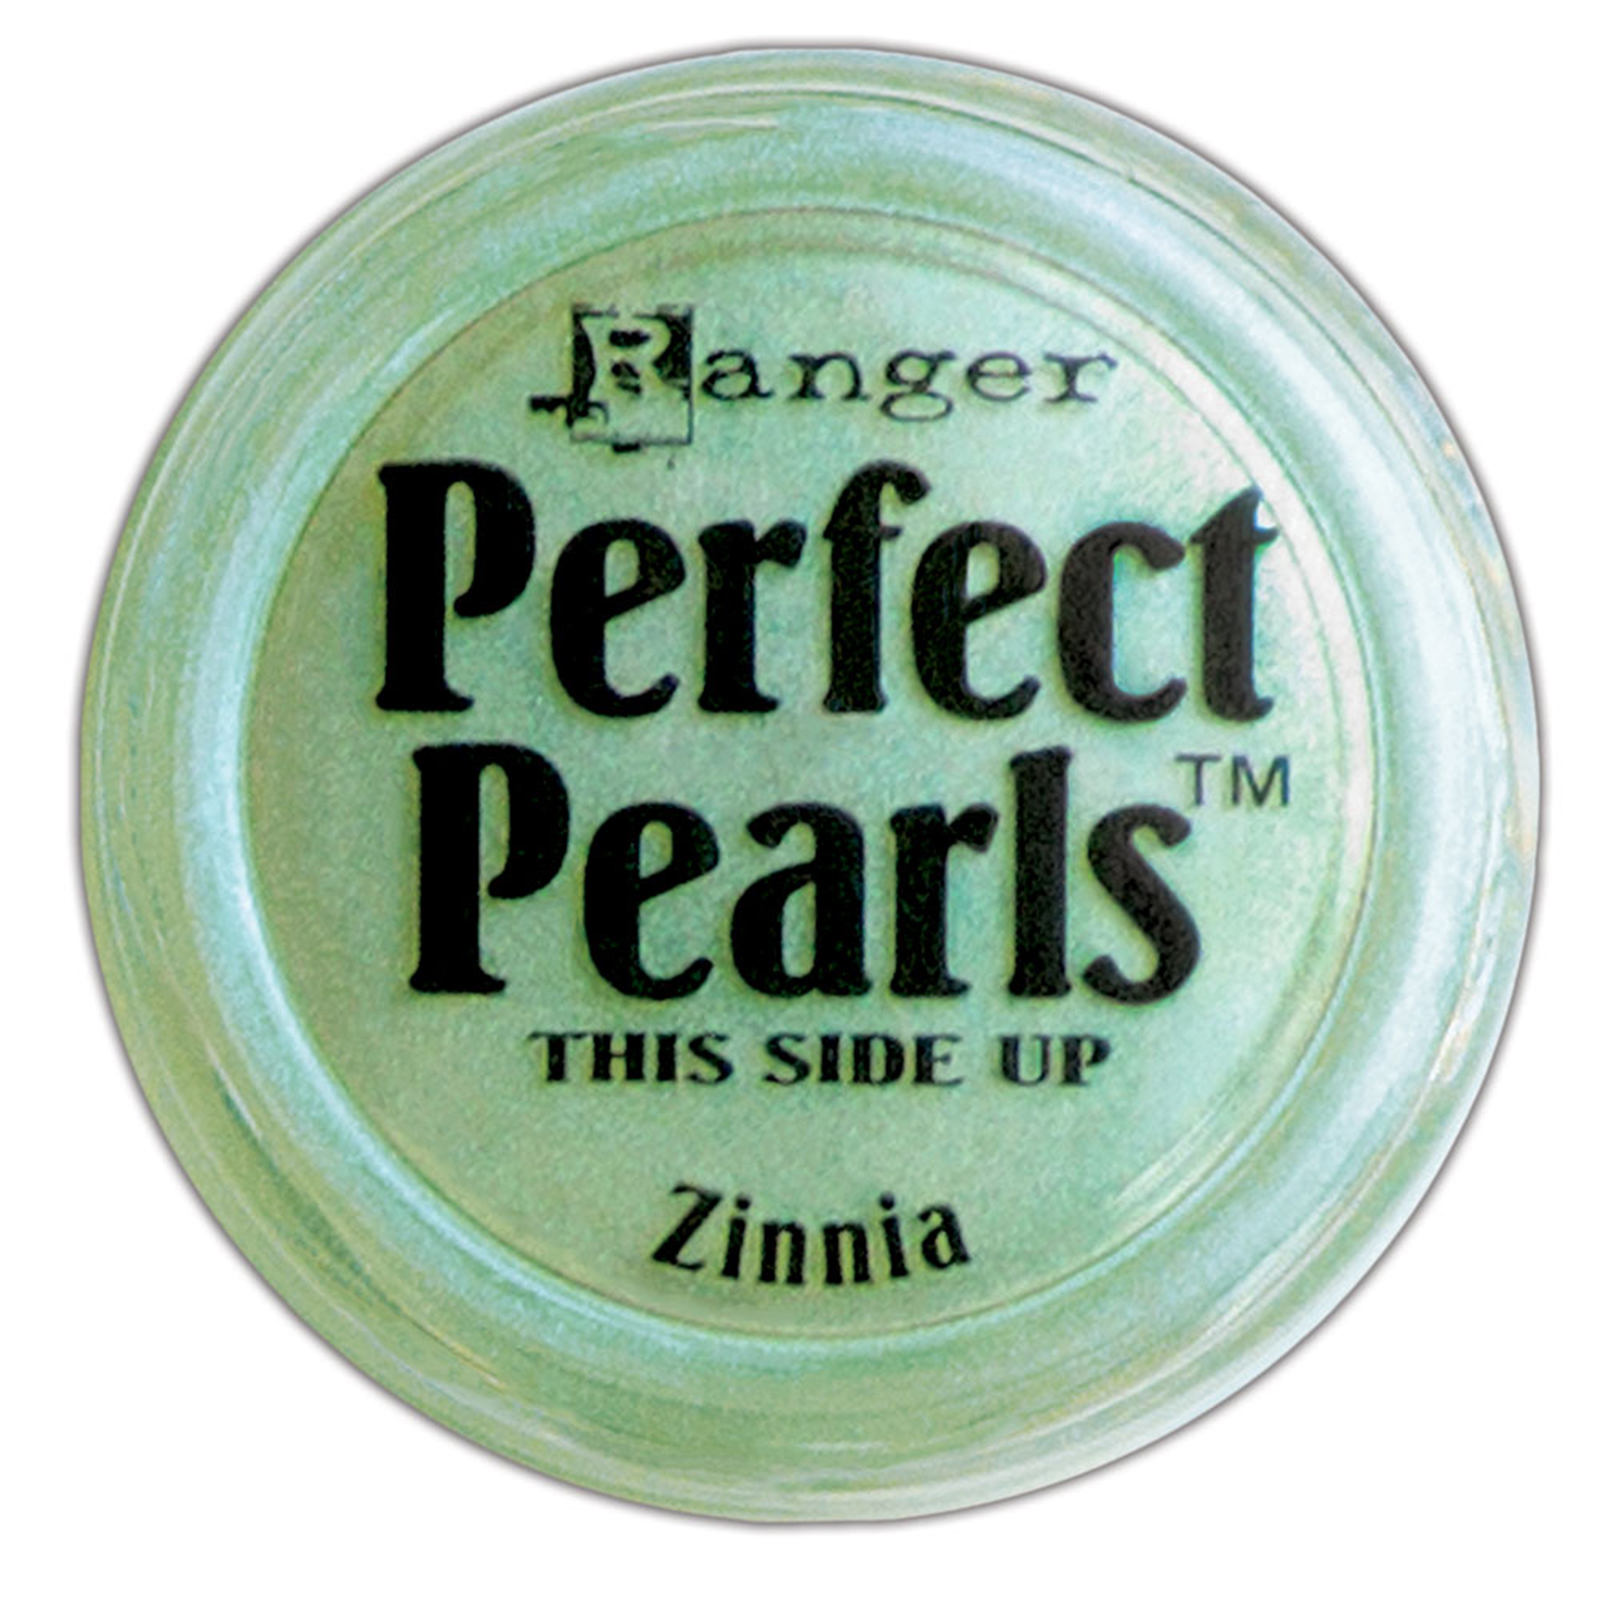 Ranger • Perfect pearls Pigment powder Zinnia